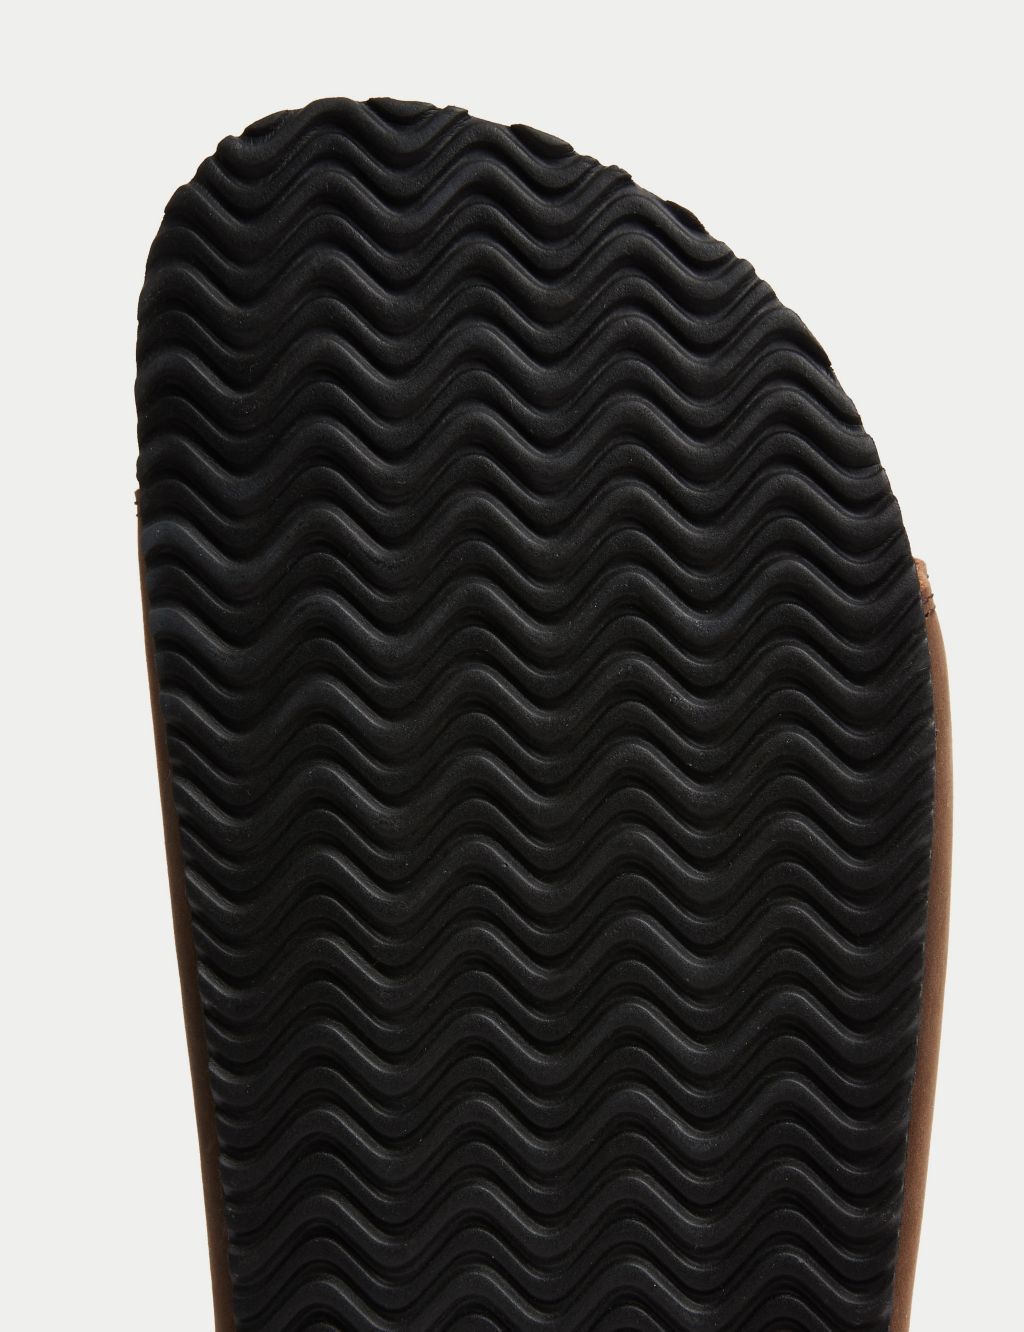 Leather Slip-On Sandals image 4